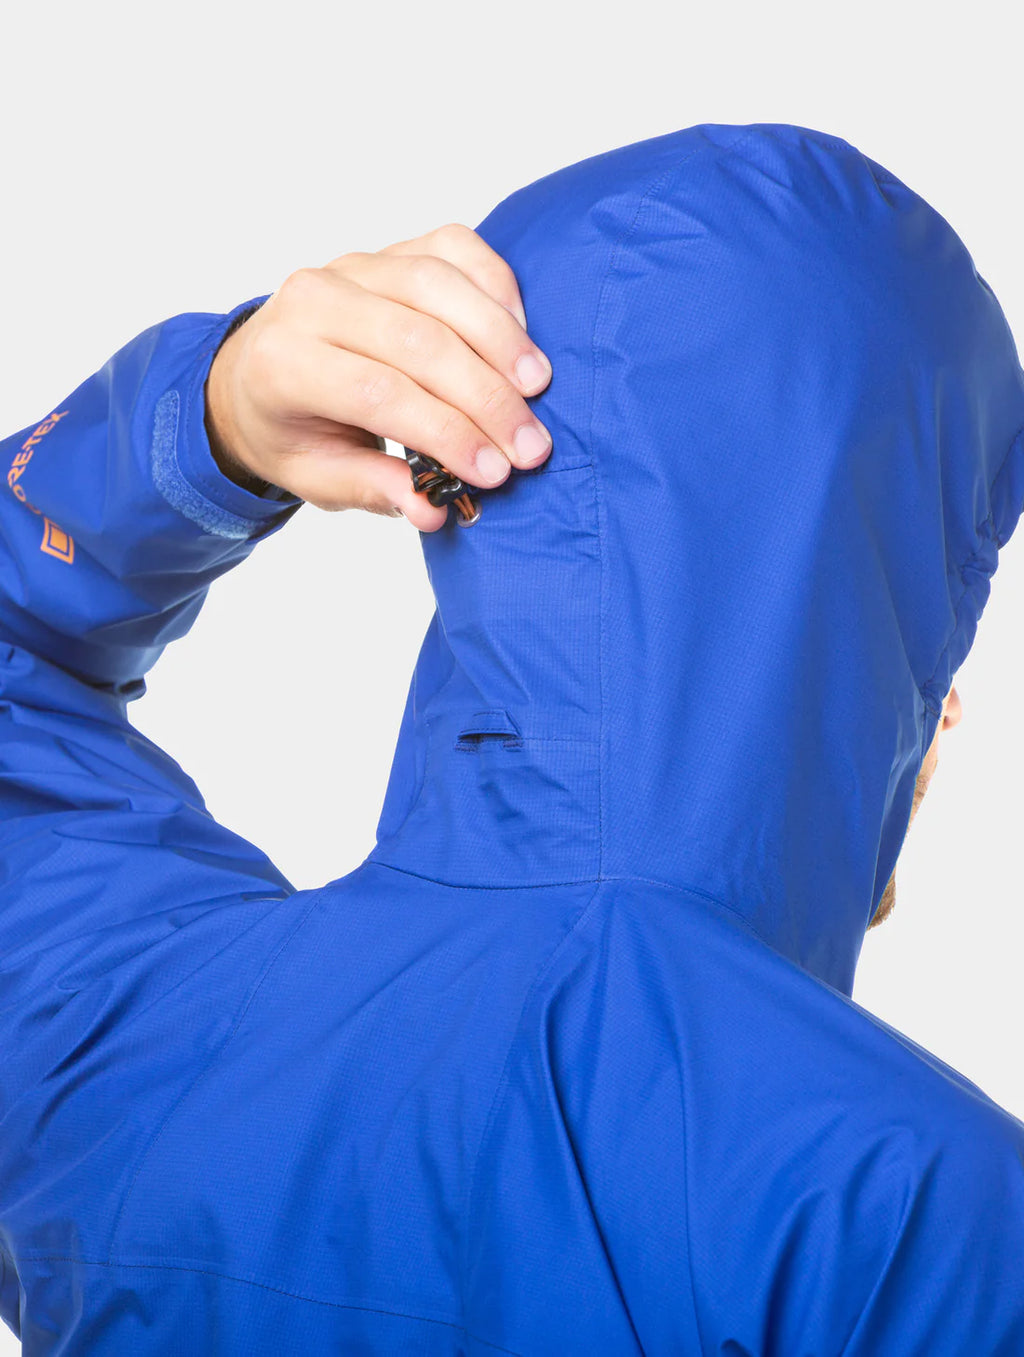 Buy Ronhill Womens Tech Gore-Tex Windstopper Running Blue Jacket